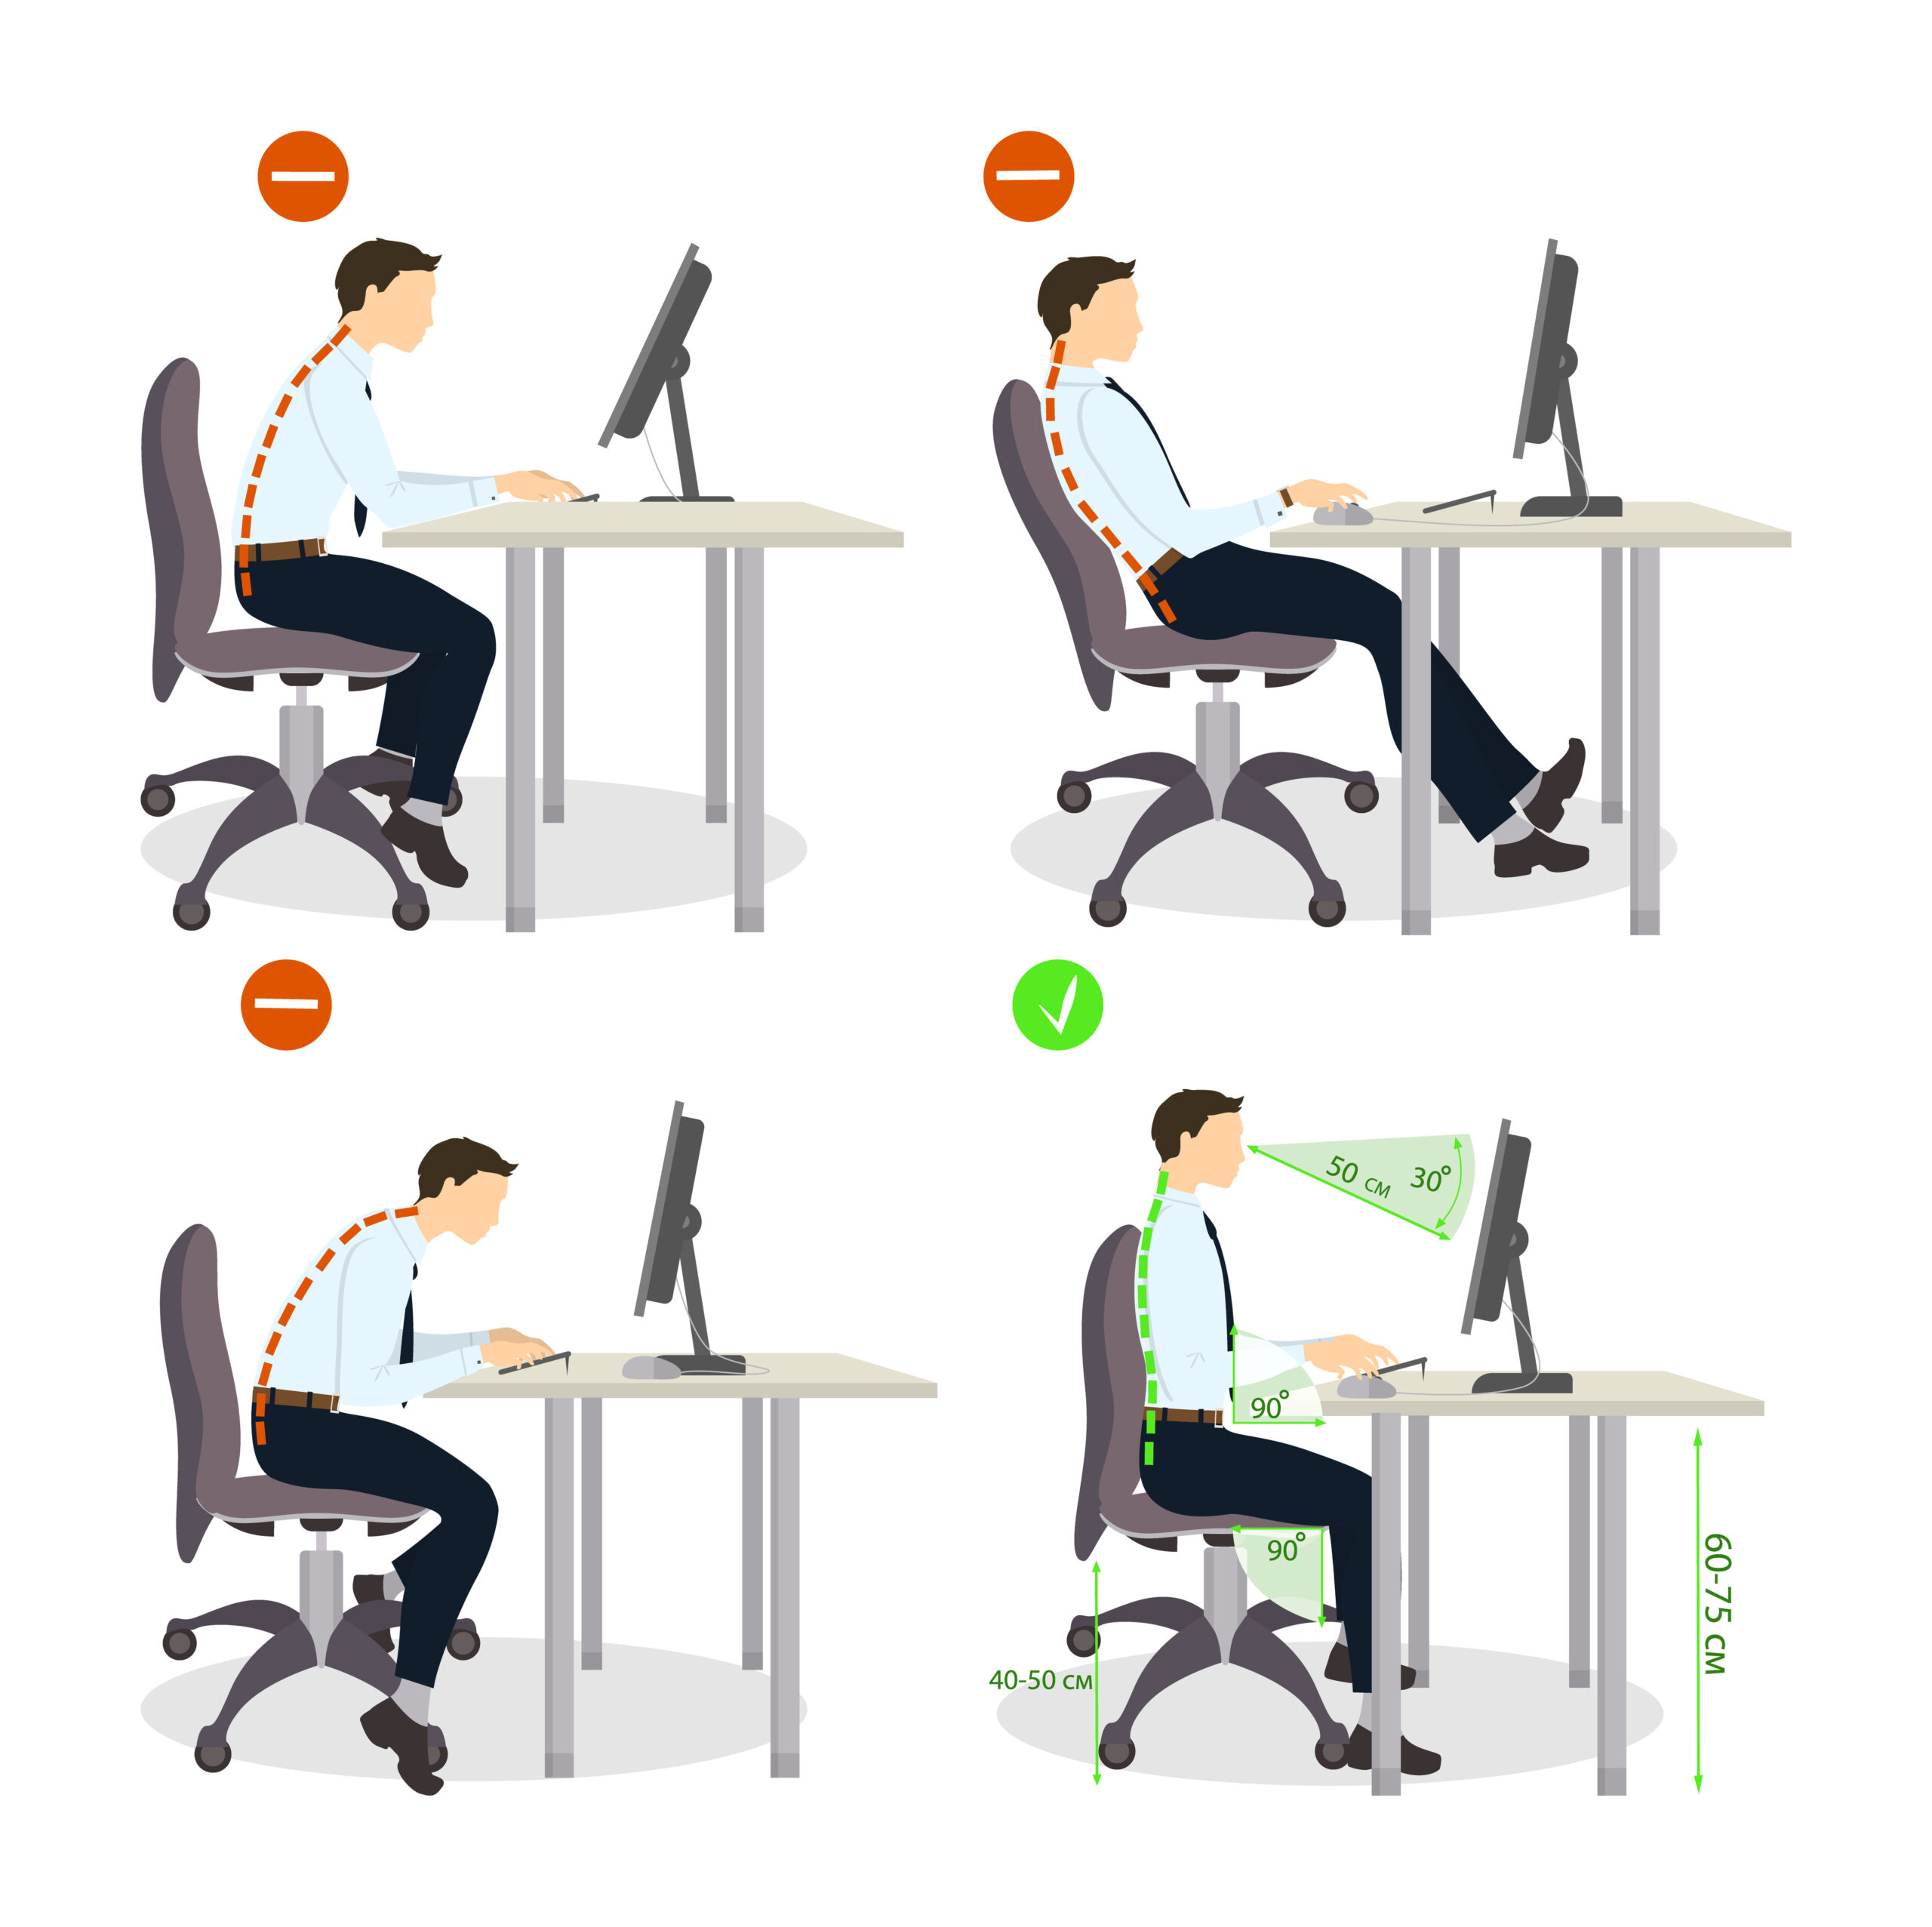 Proper posture chart